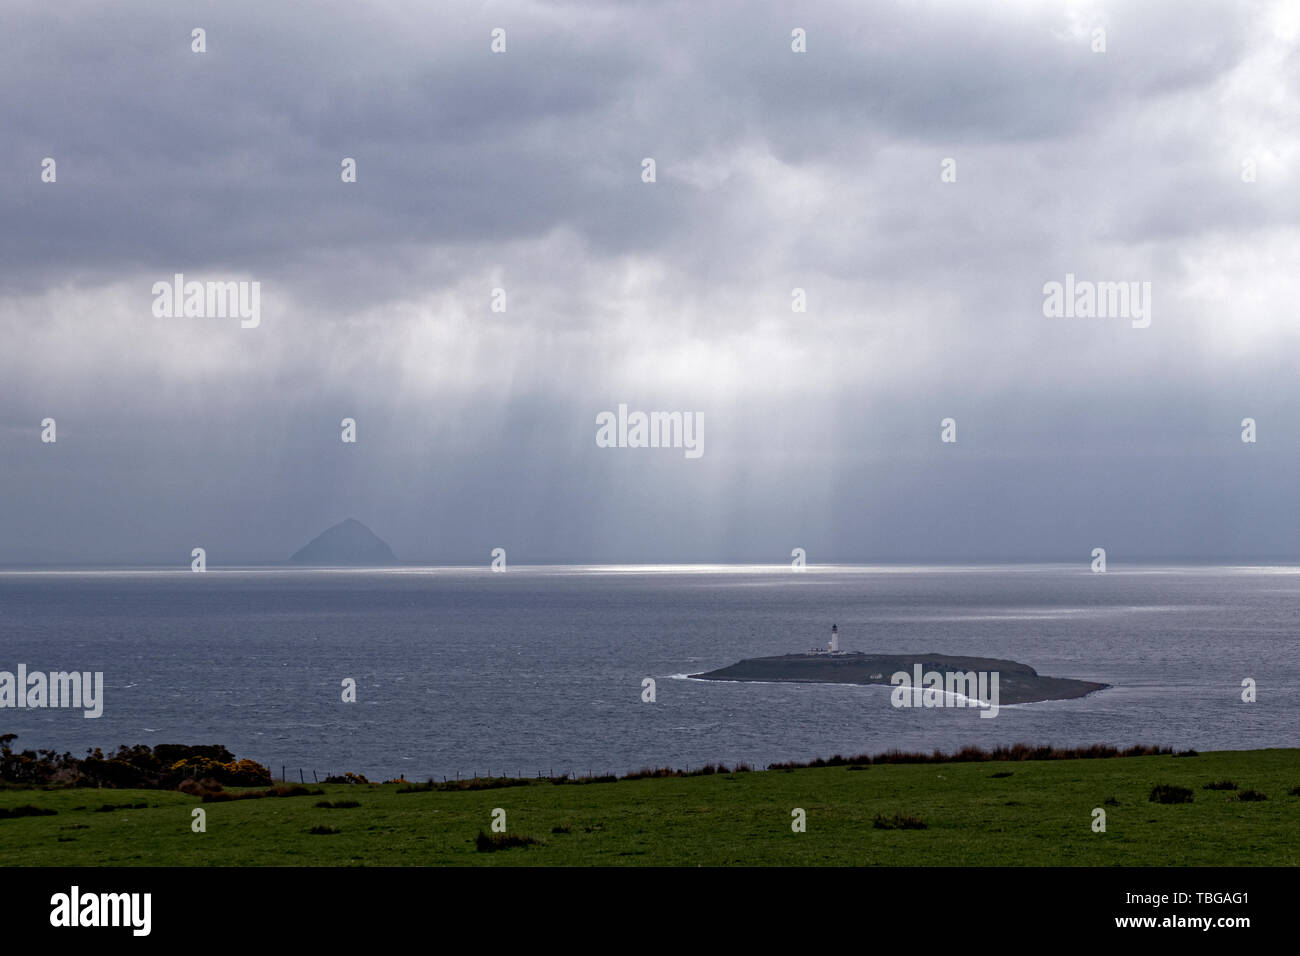 Pladda, Pladaigh Island, Firth of Clyde, Scotland - Ailsa Craig in background Stock Photo